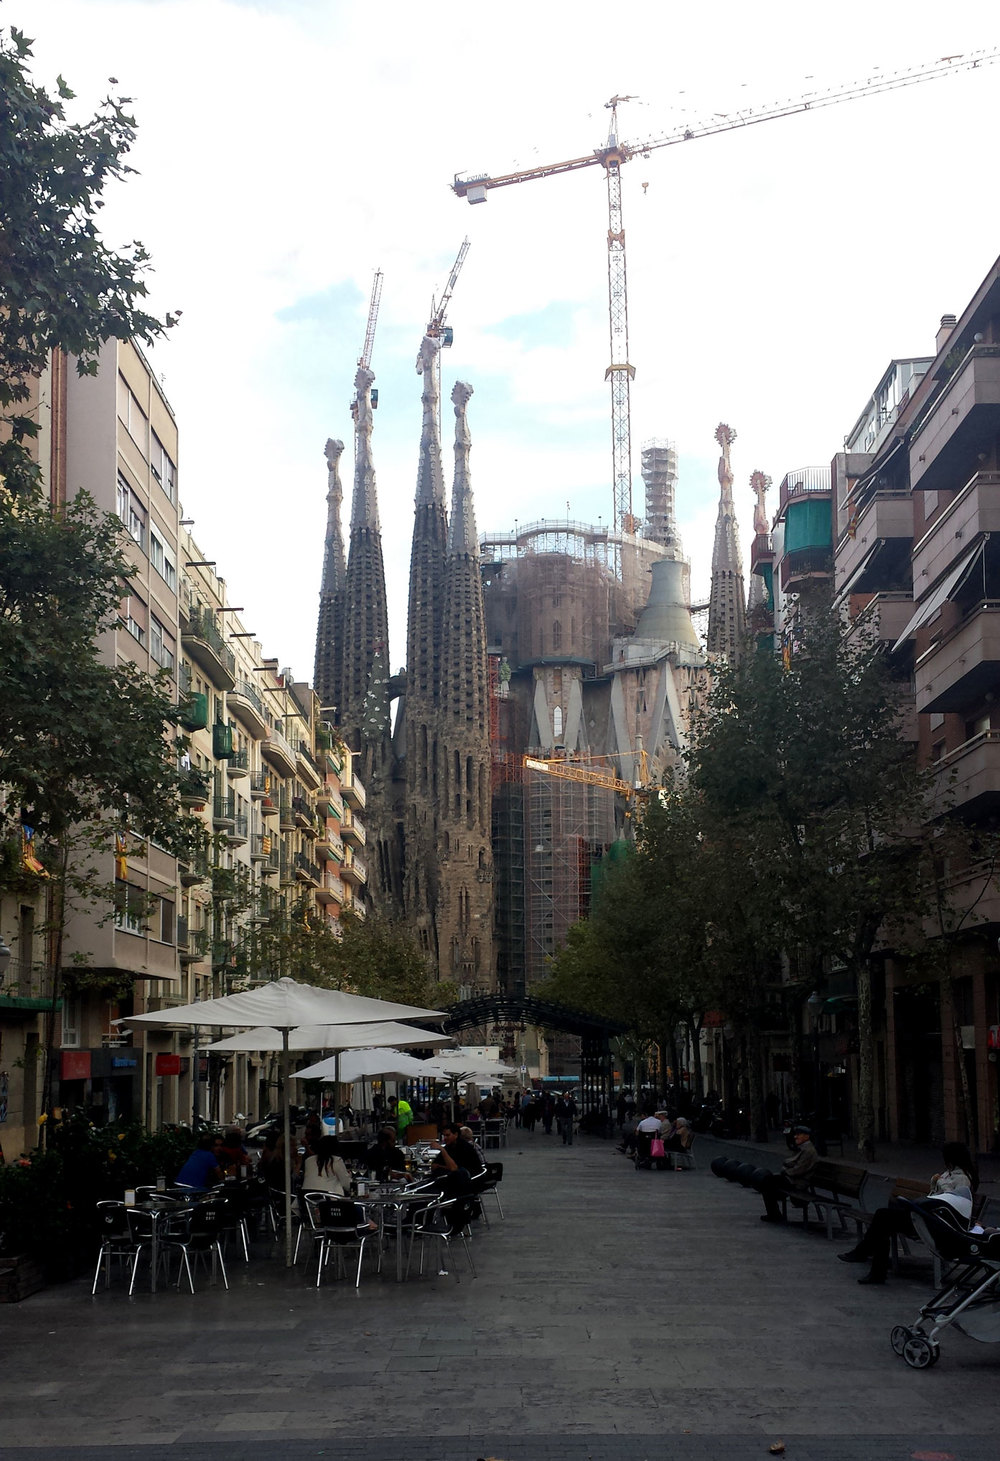 From Gaudi Avenue